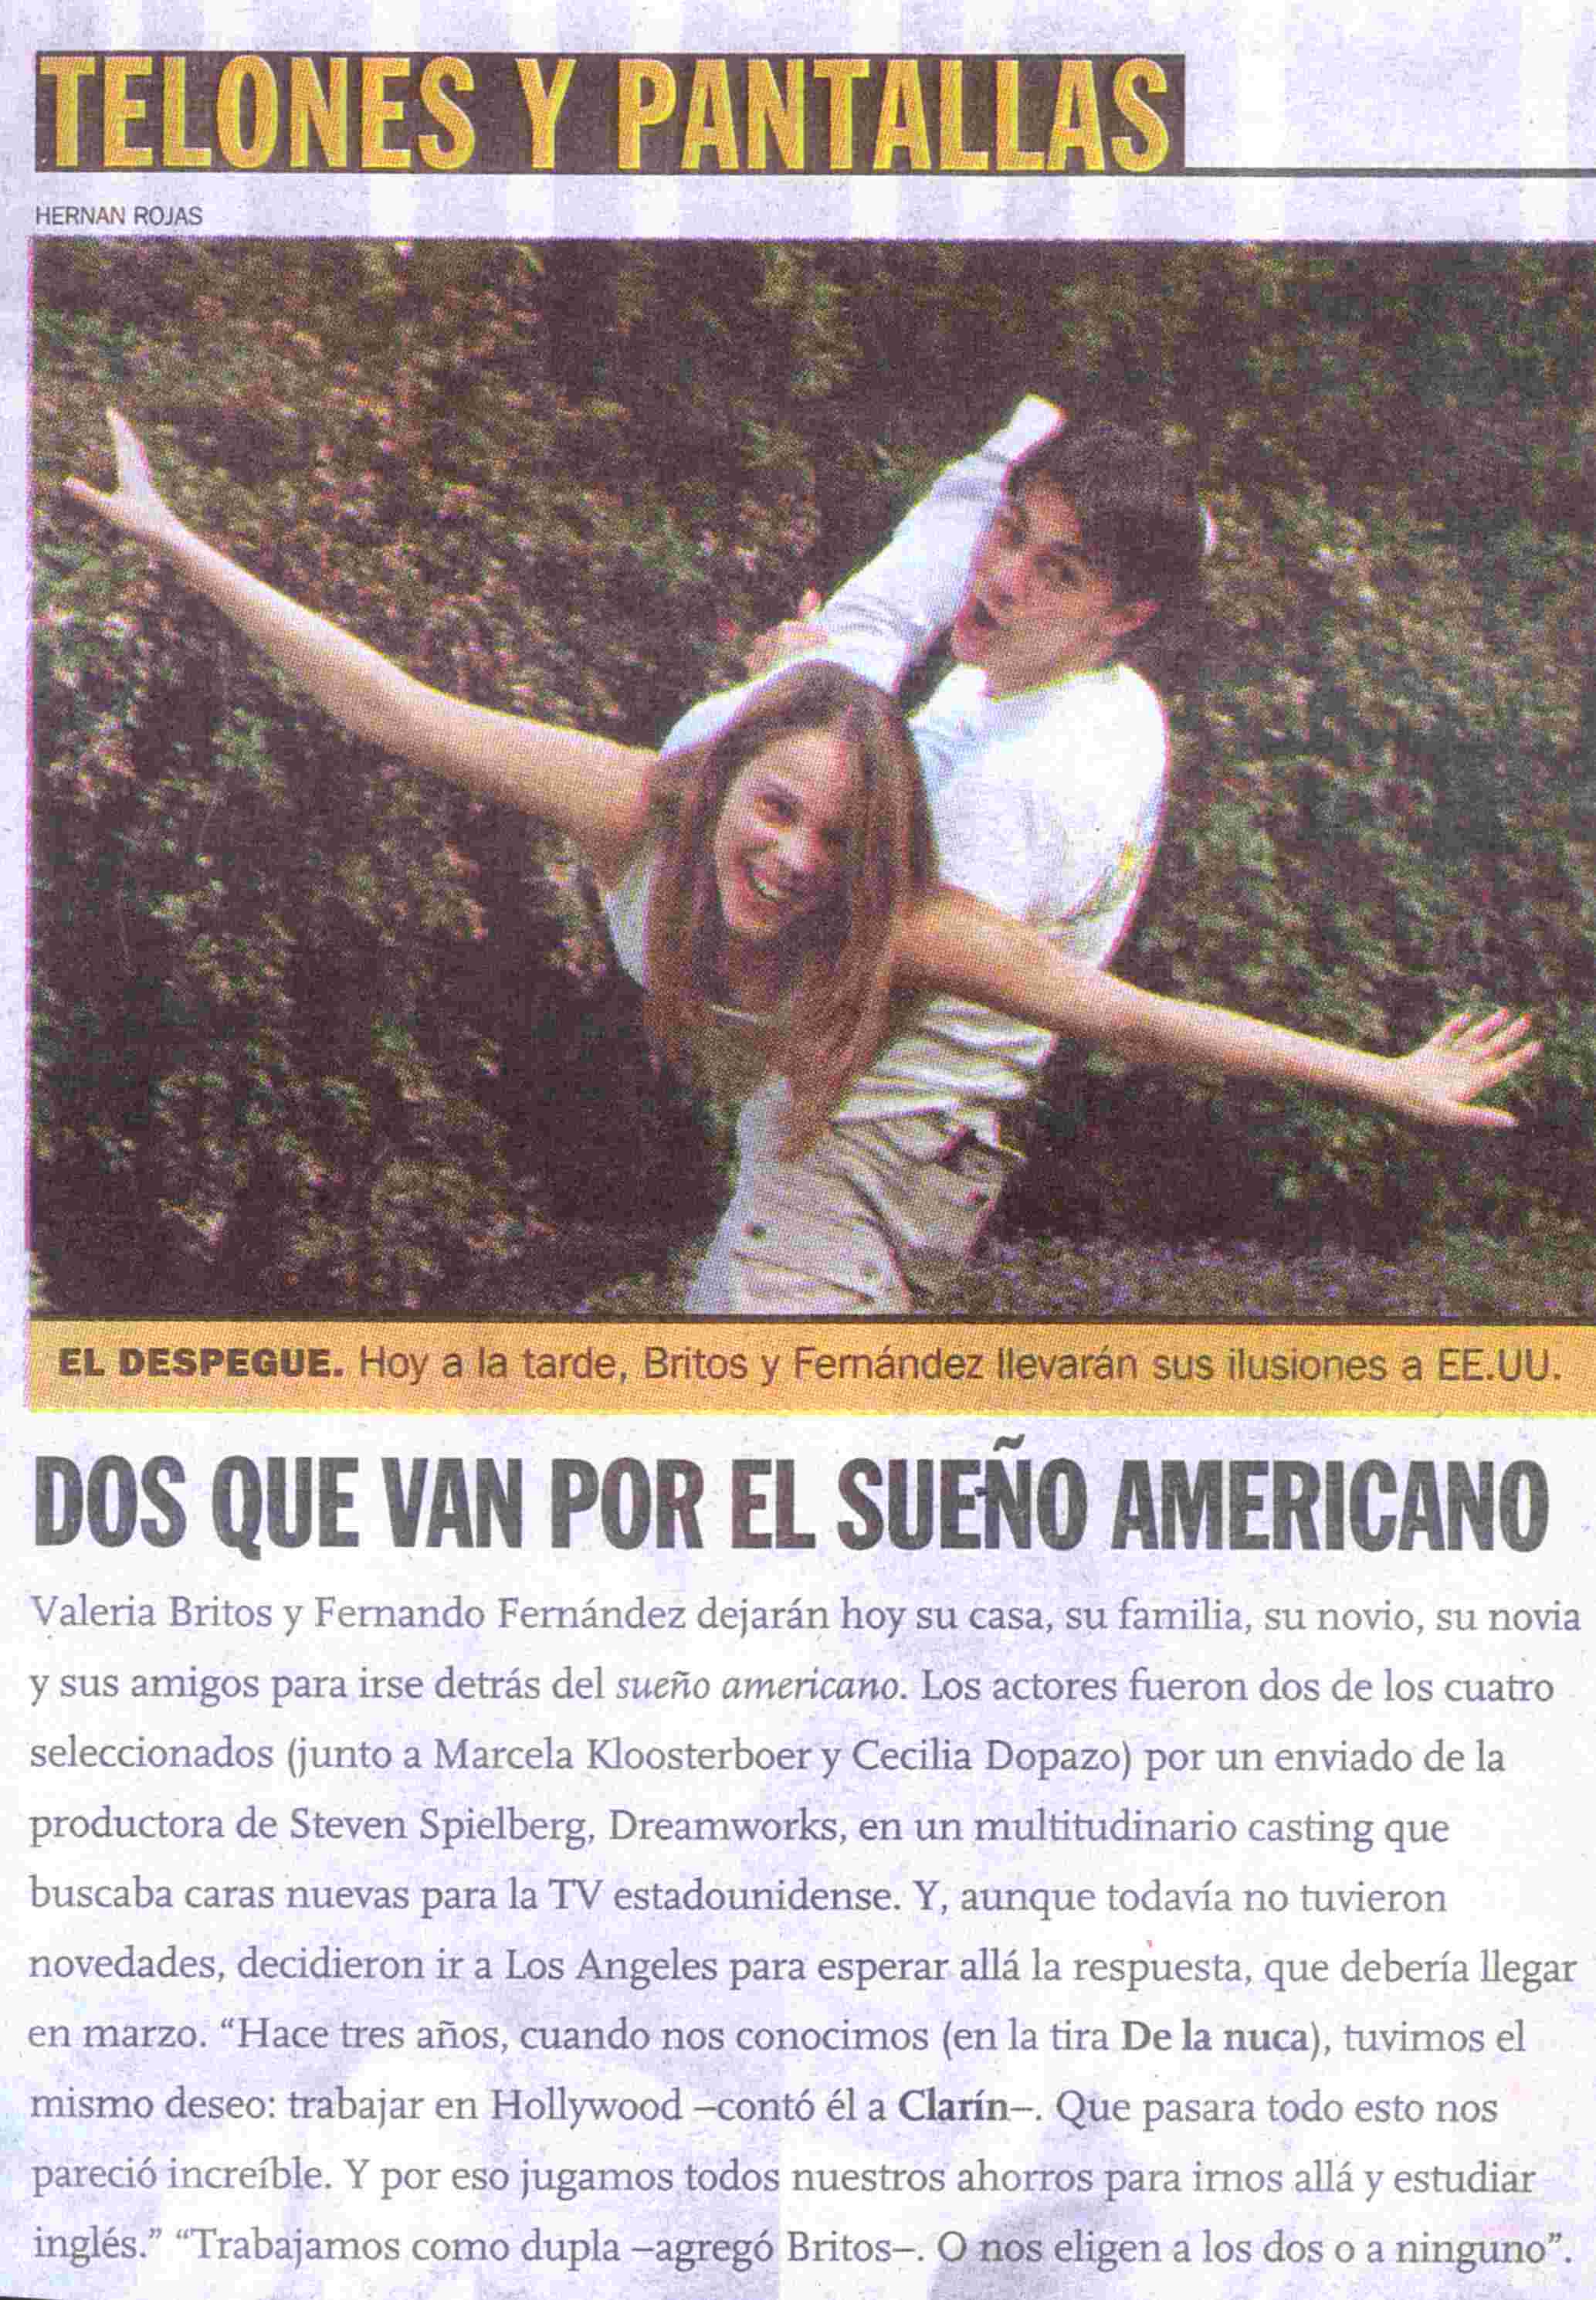 Fernando Fernandez and Valeria Britos (Press Article/Clarin Newspaper).